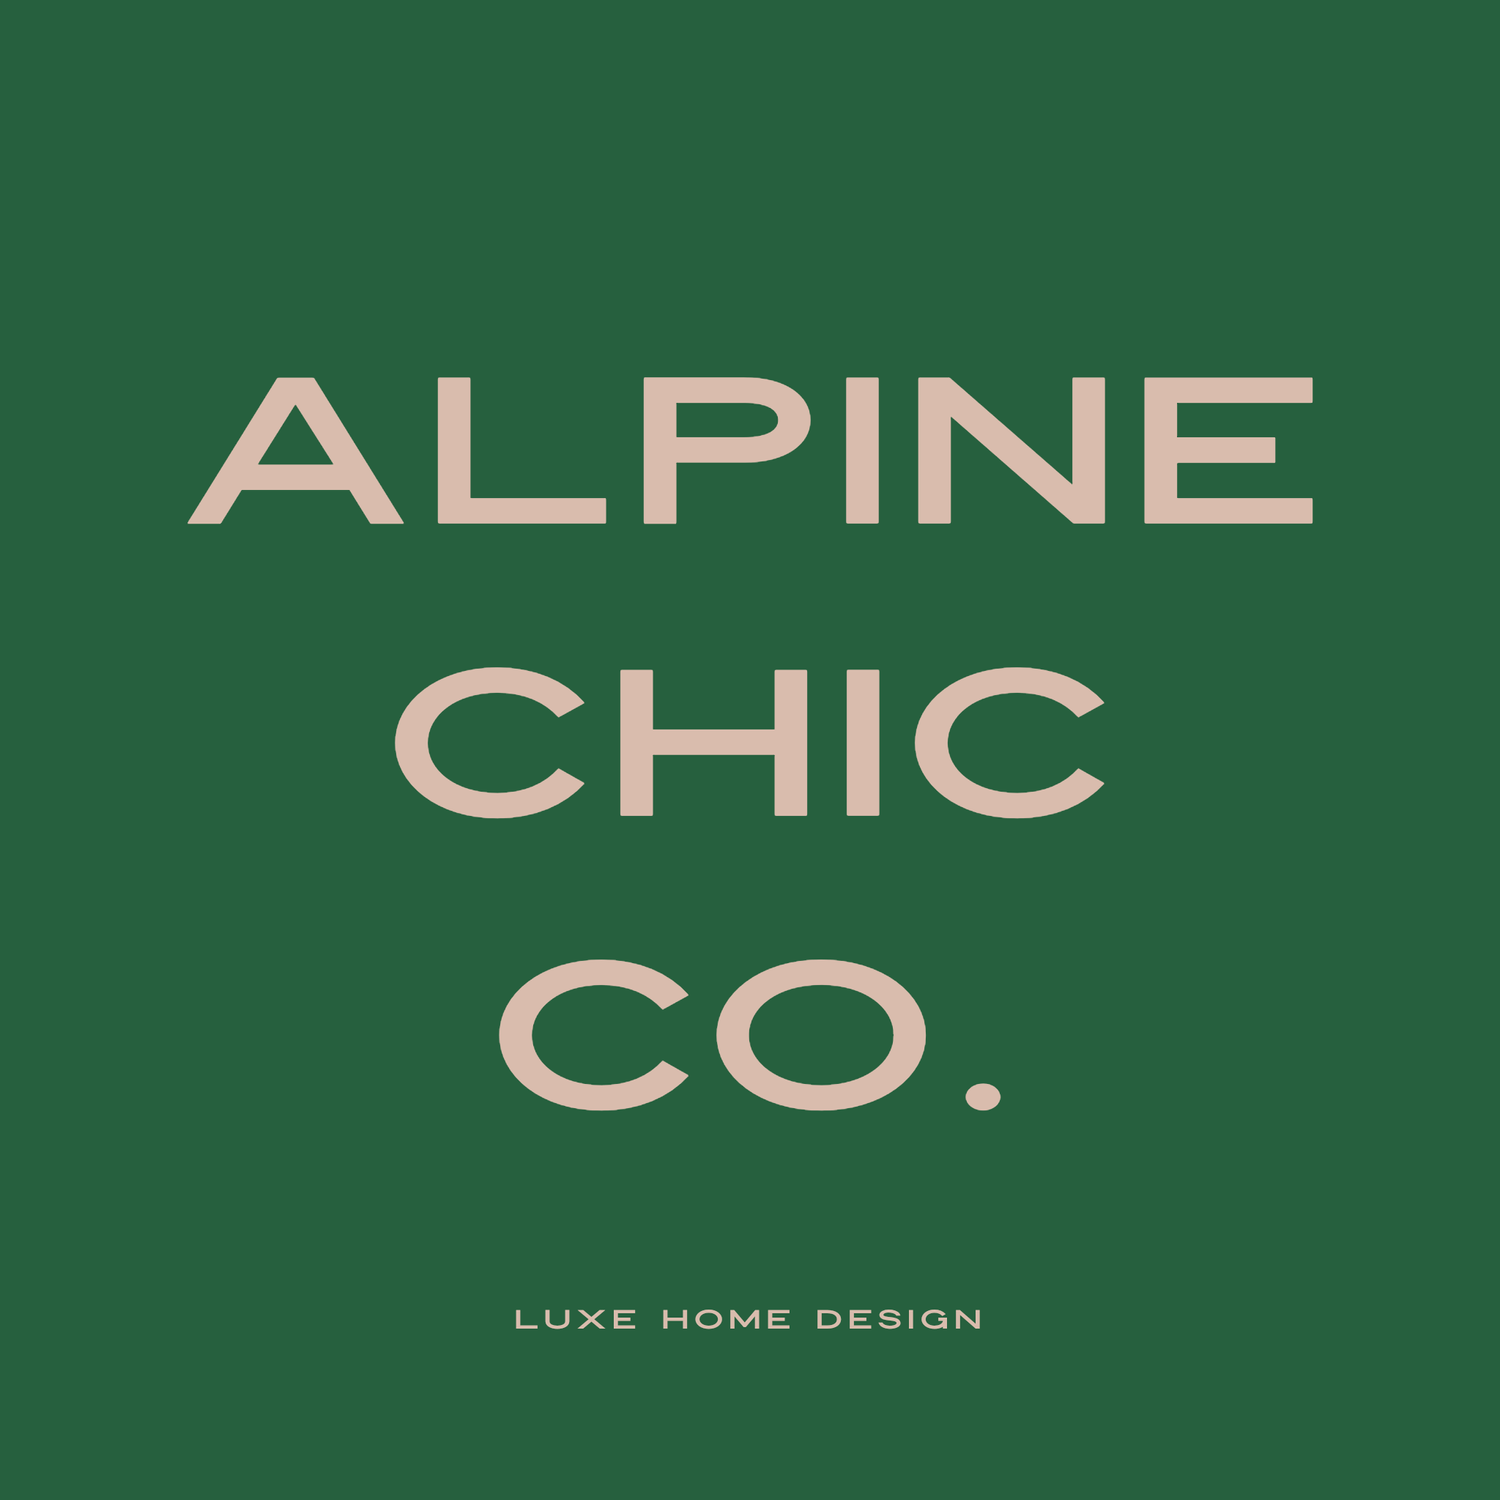 Alpine Chic Co.